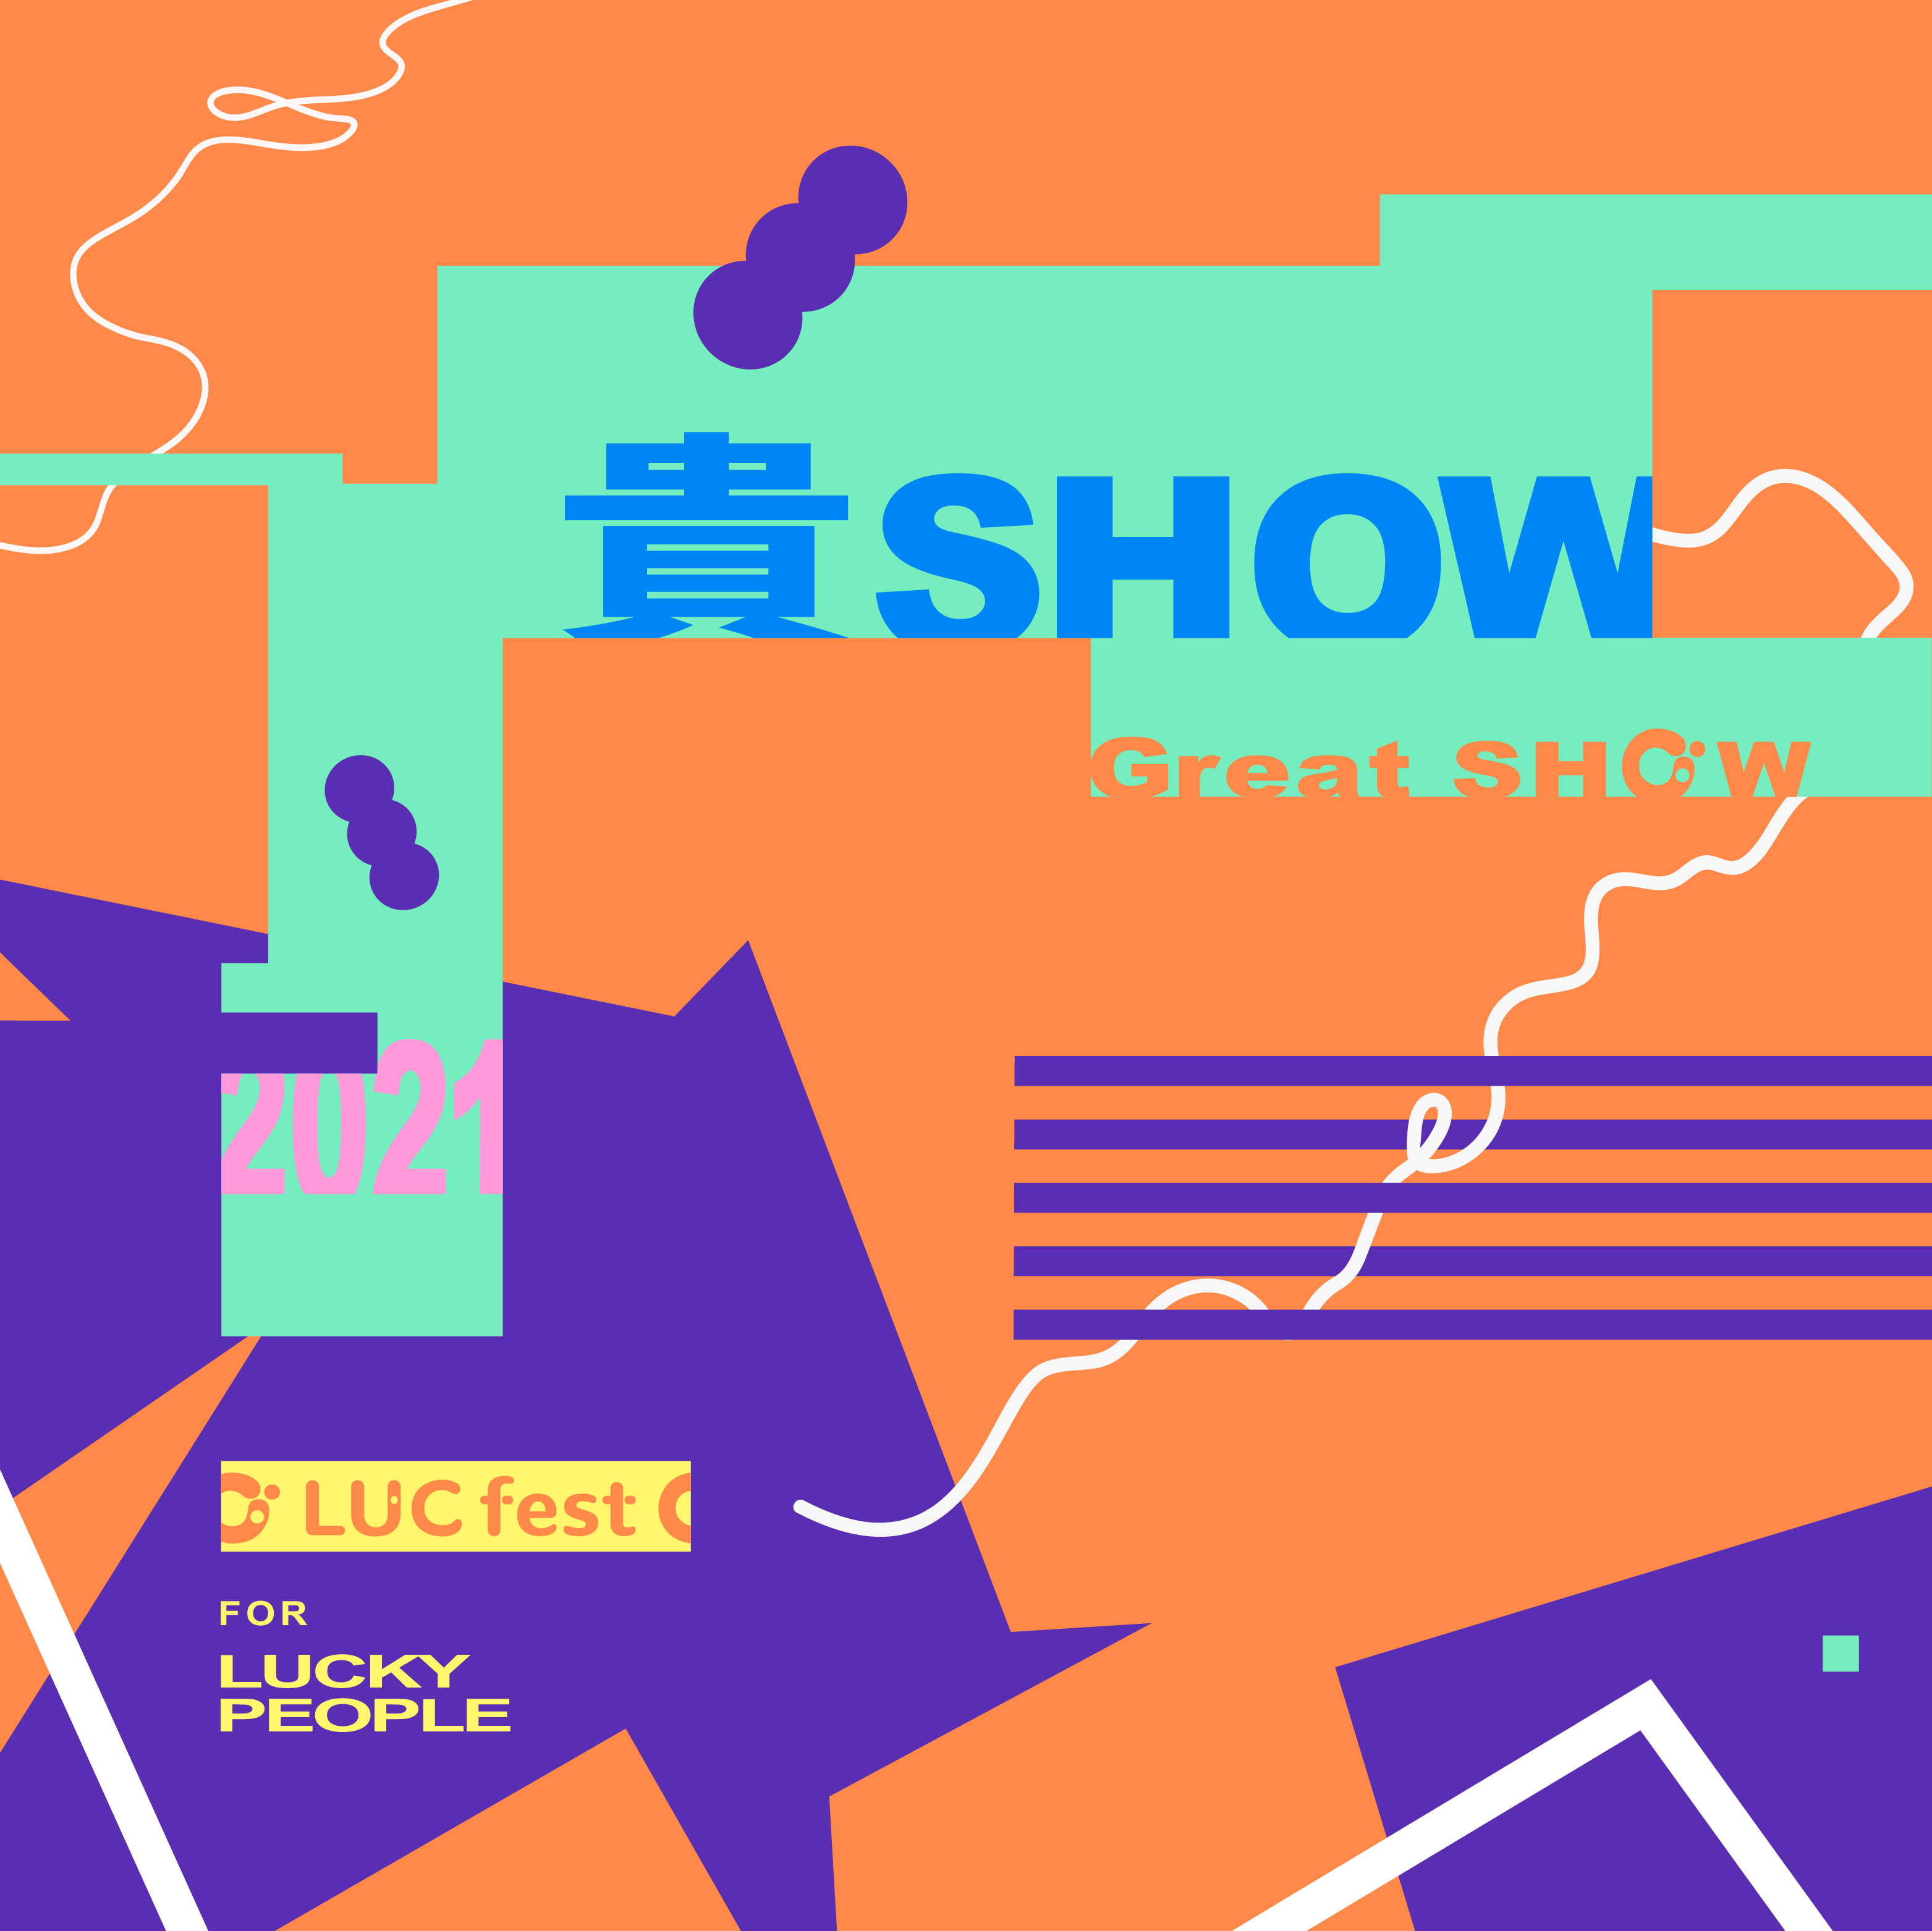 2021 LUCfest 貴人散步音樂節 - 貴Show（Great Show）